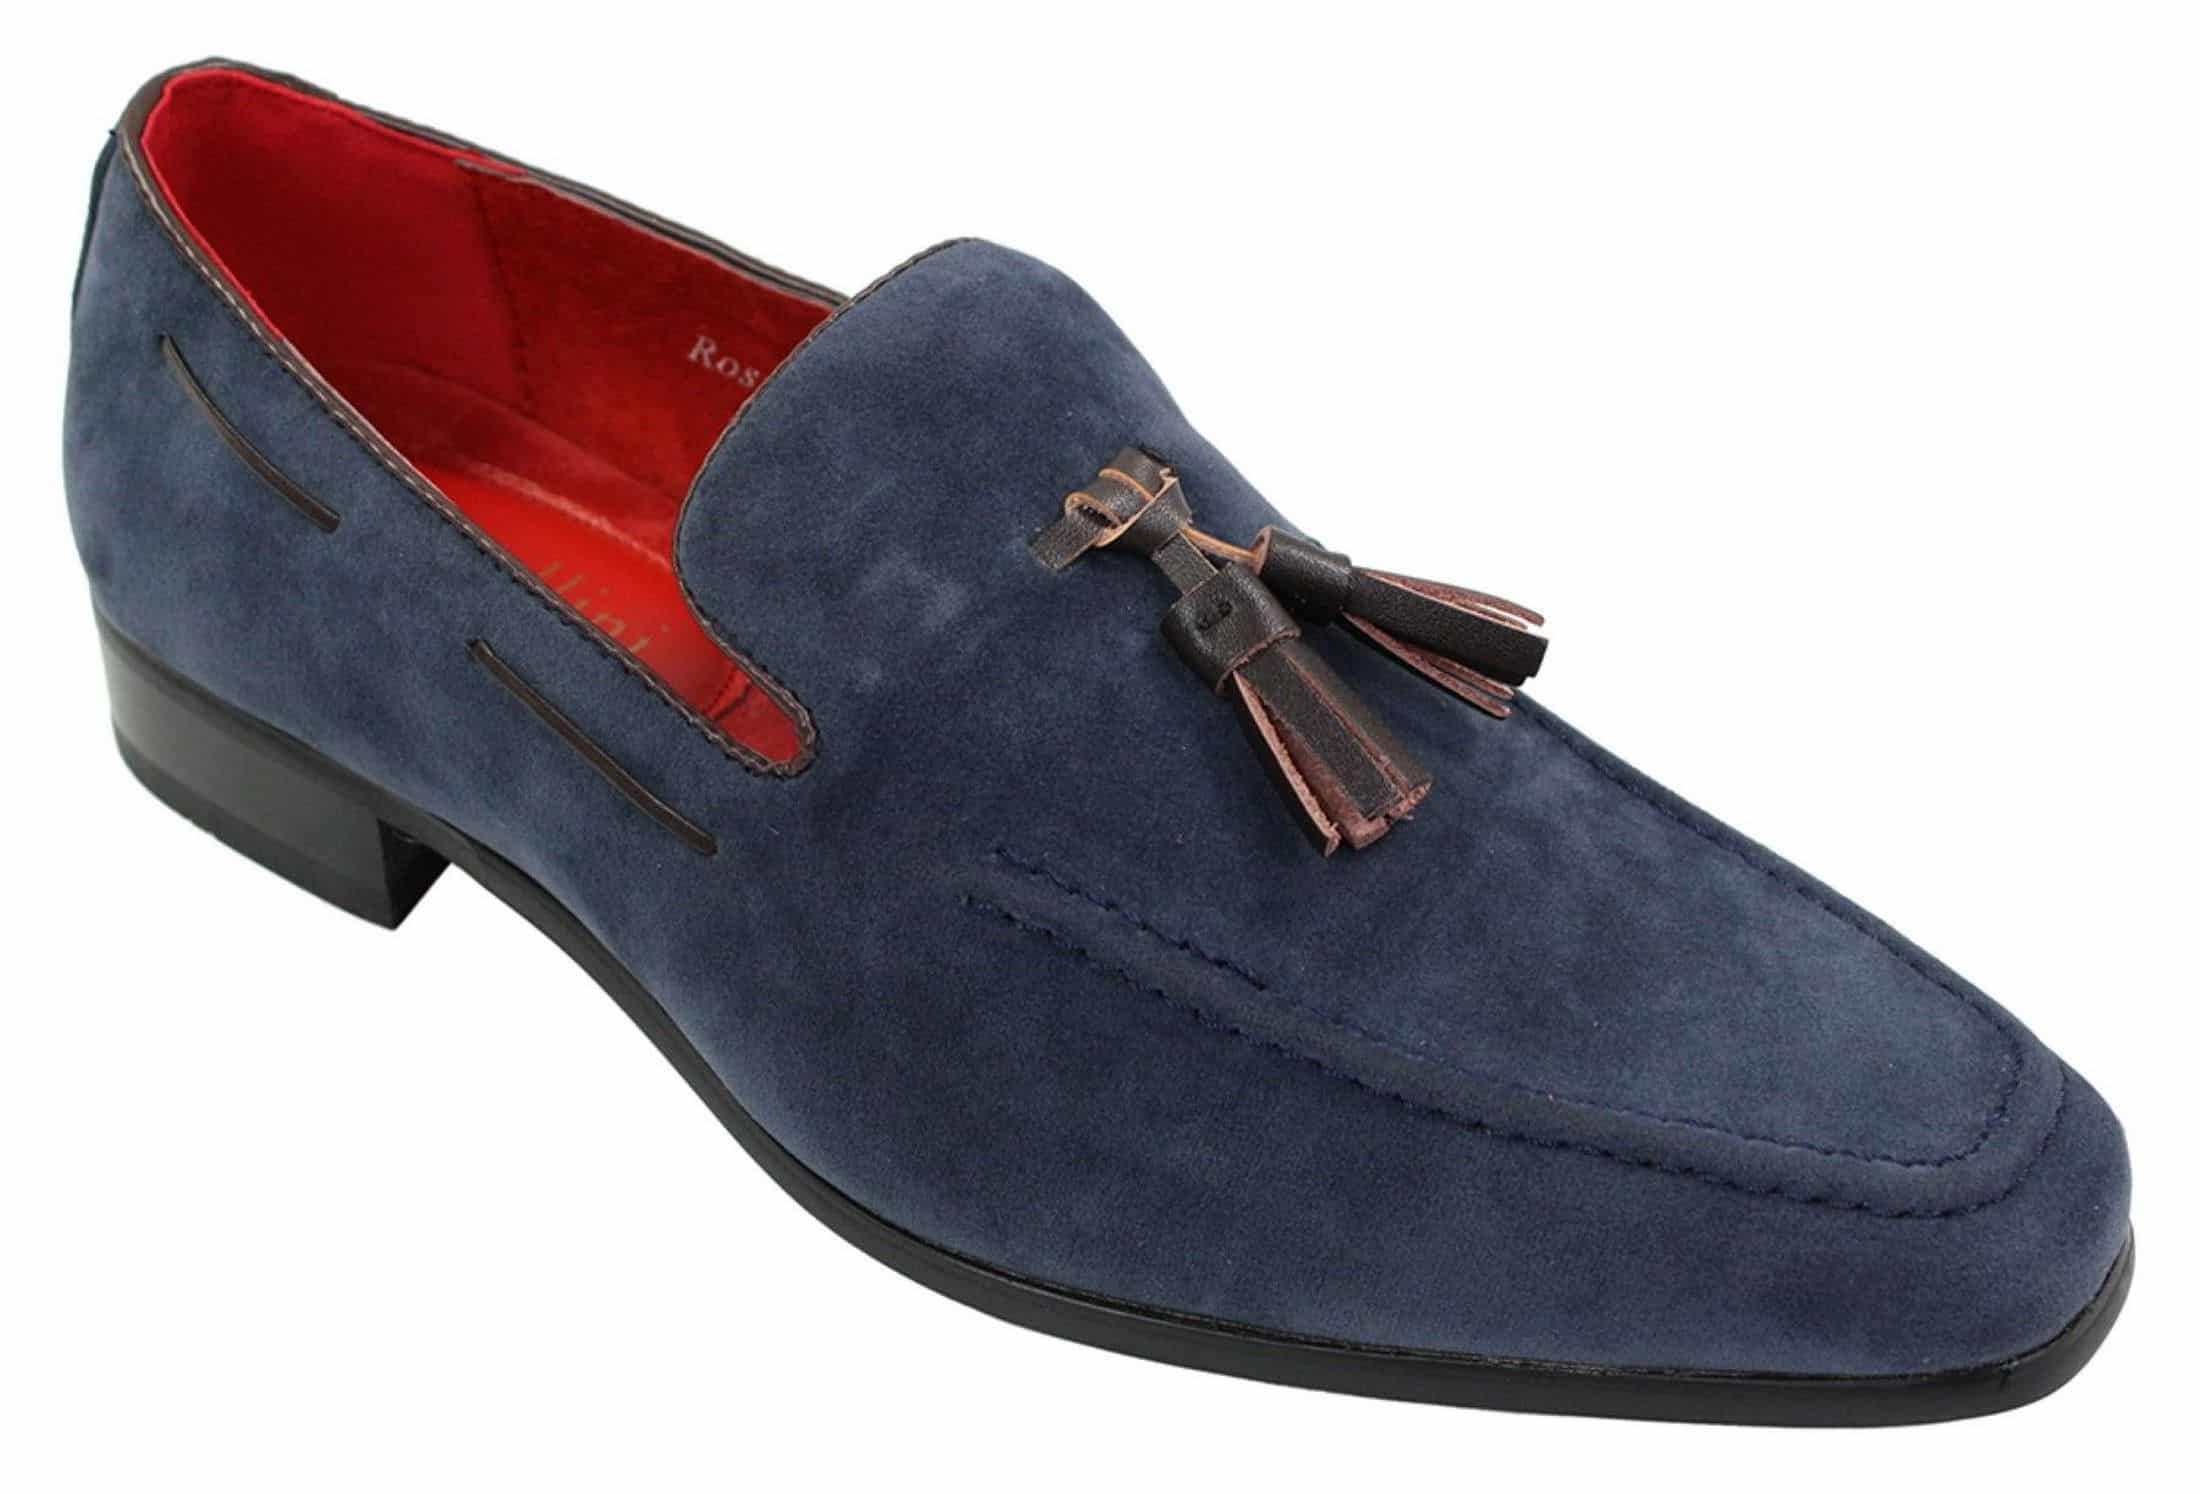 Mens Suede Loafers Driving Shoes Slip On Tassle Design ...